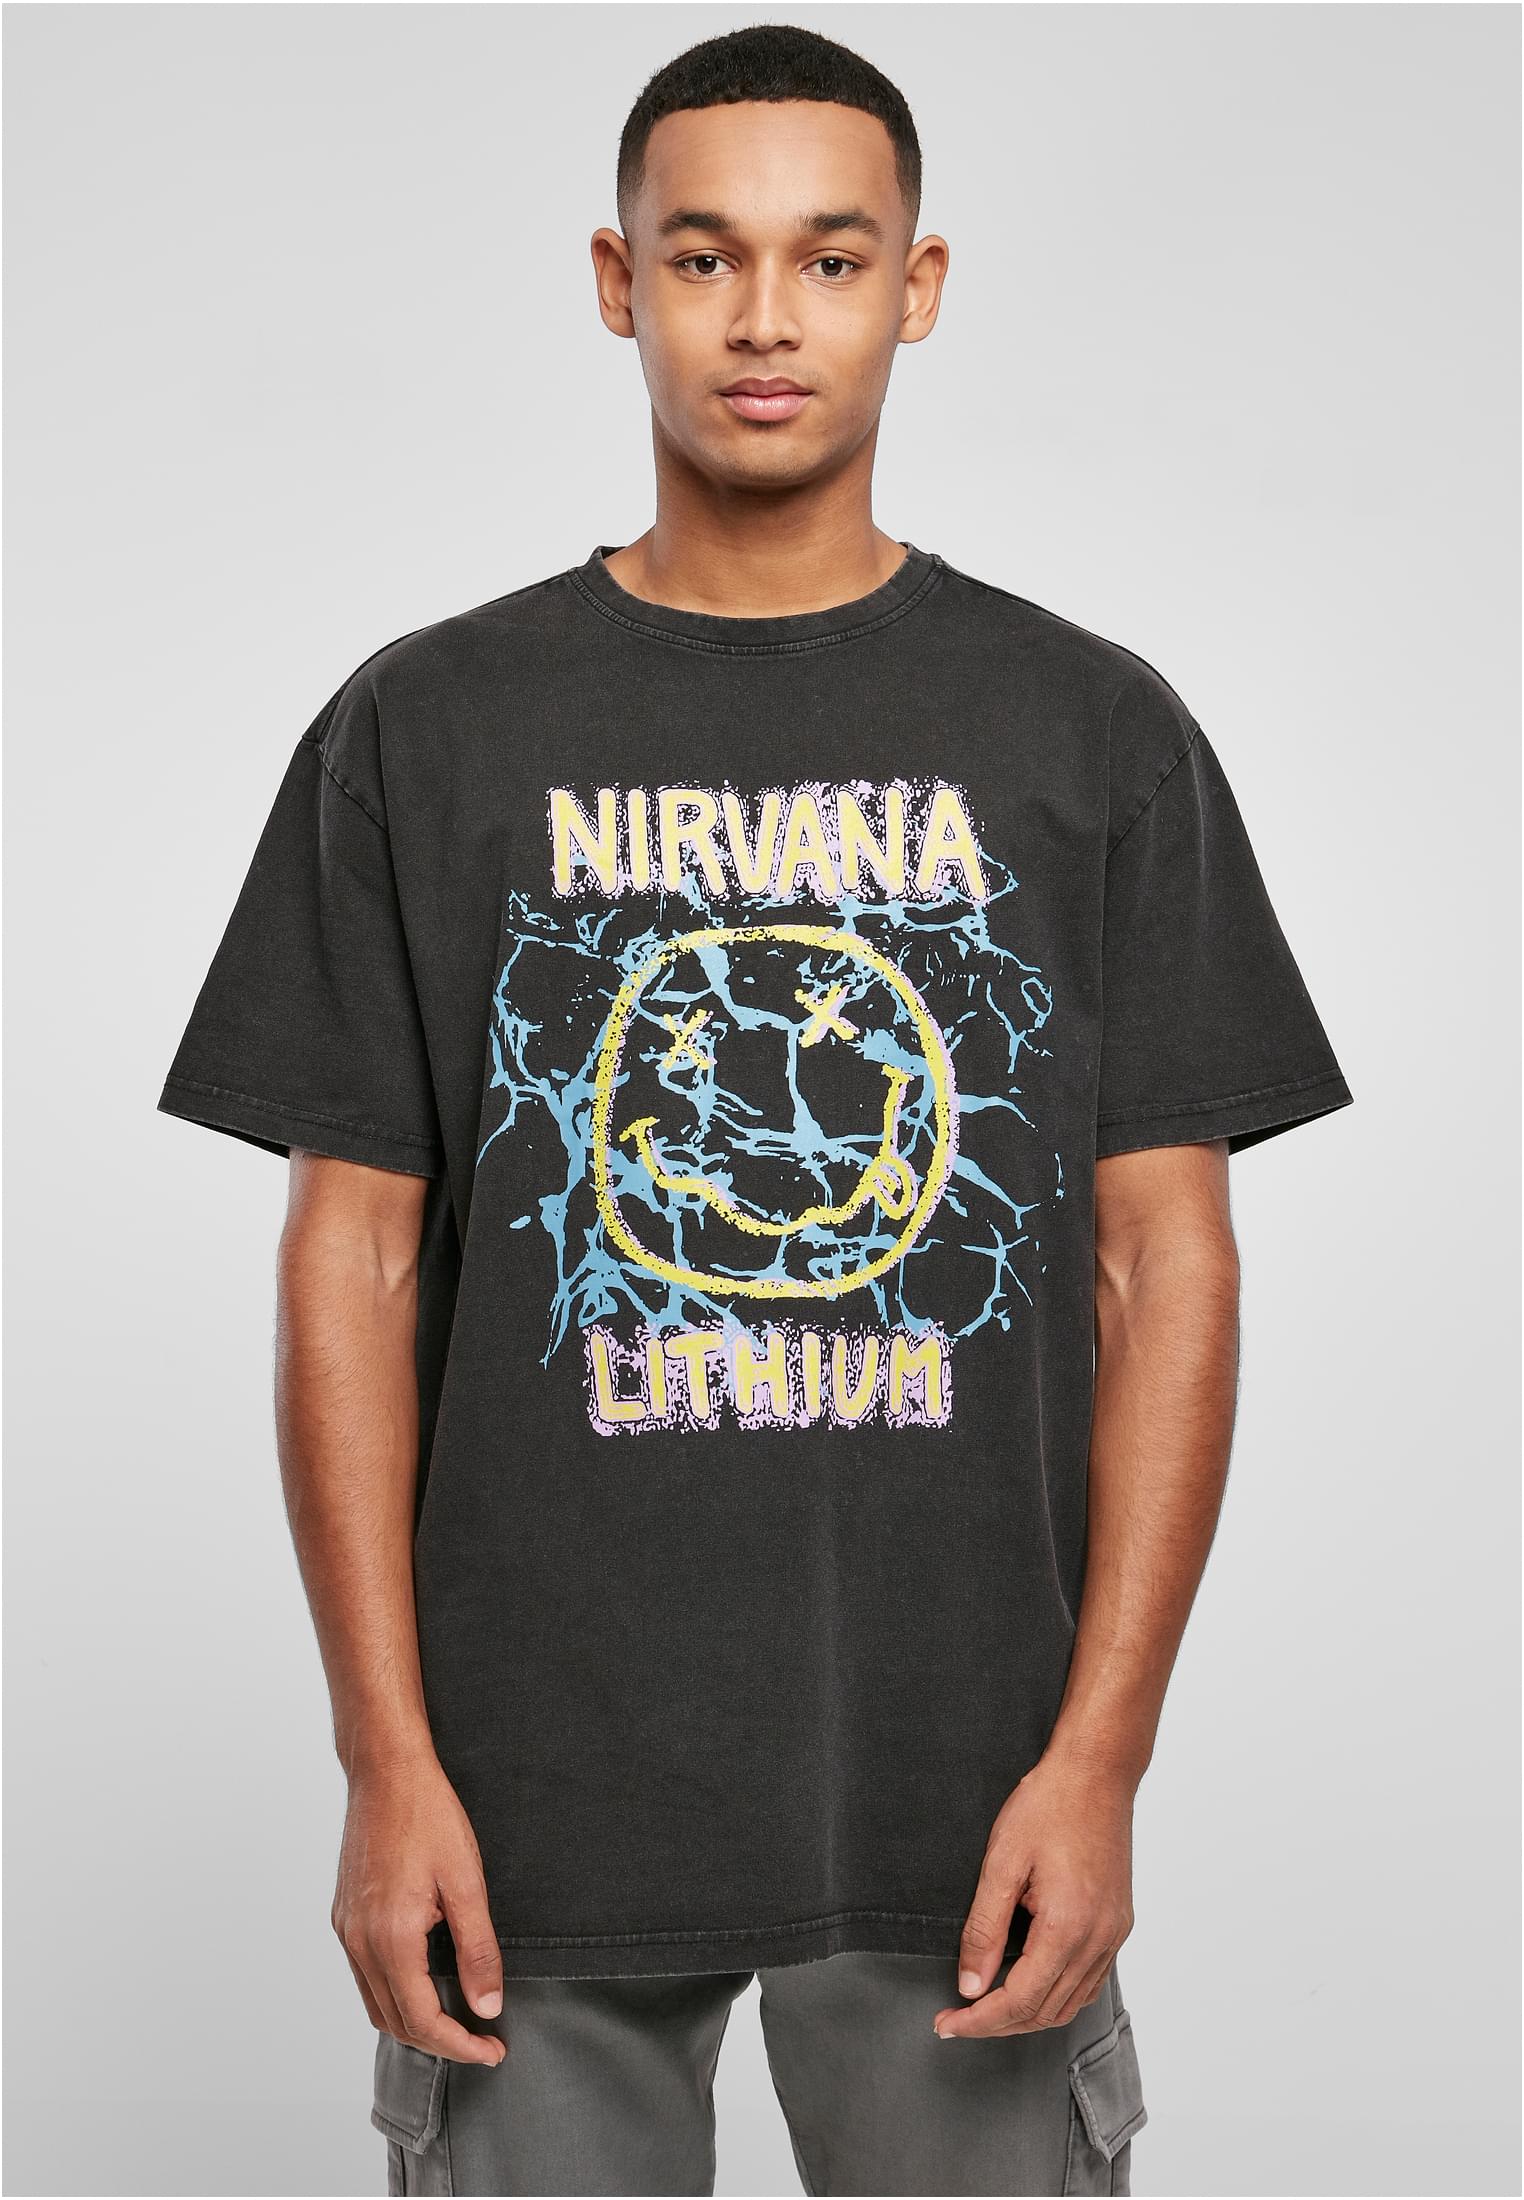 Men's Nirvana Lithium T-Shirt - Black